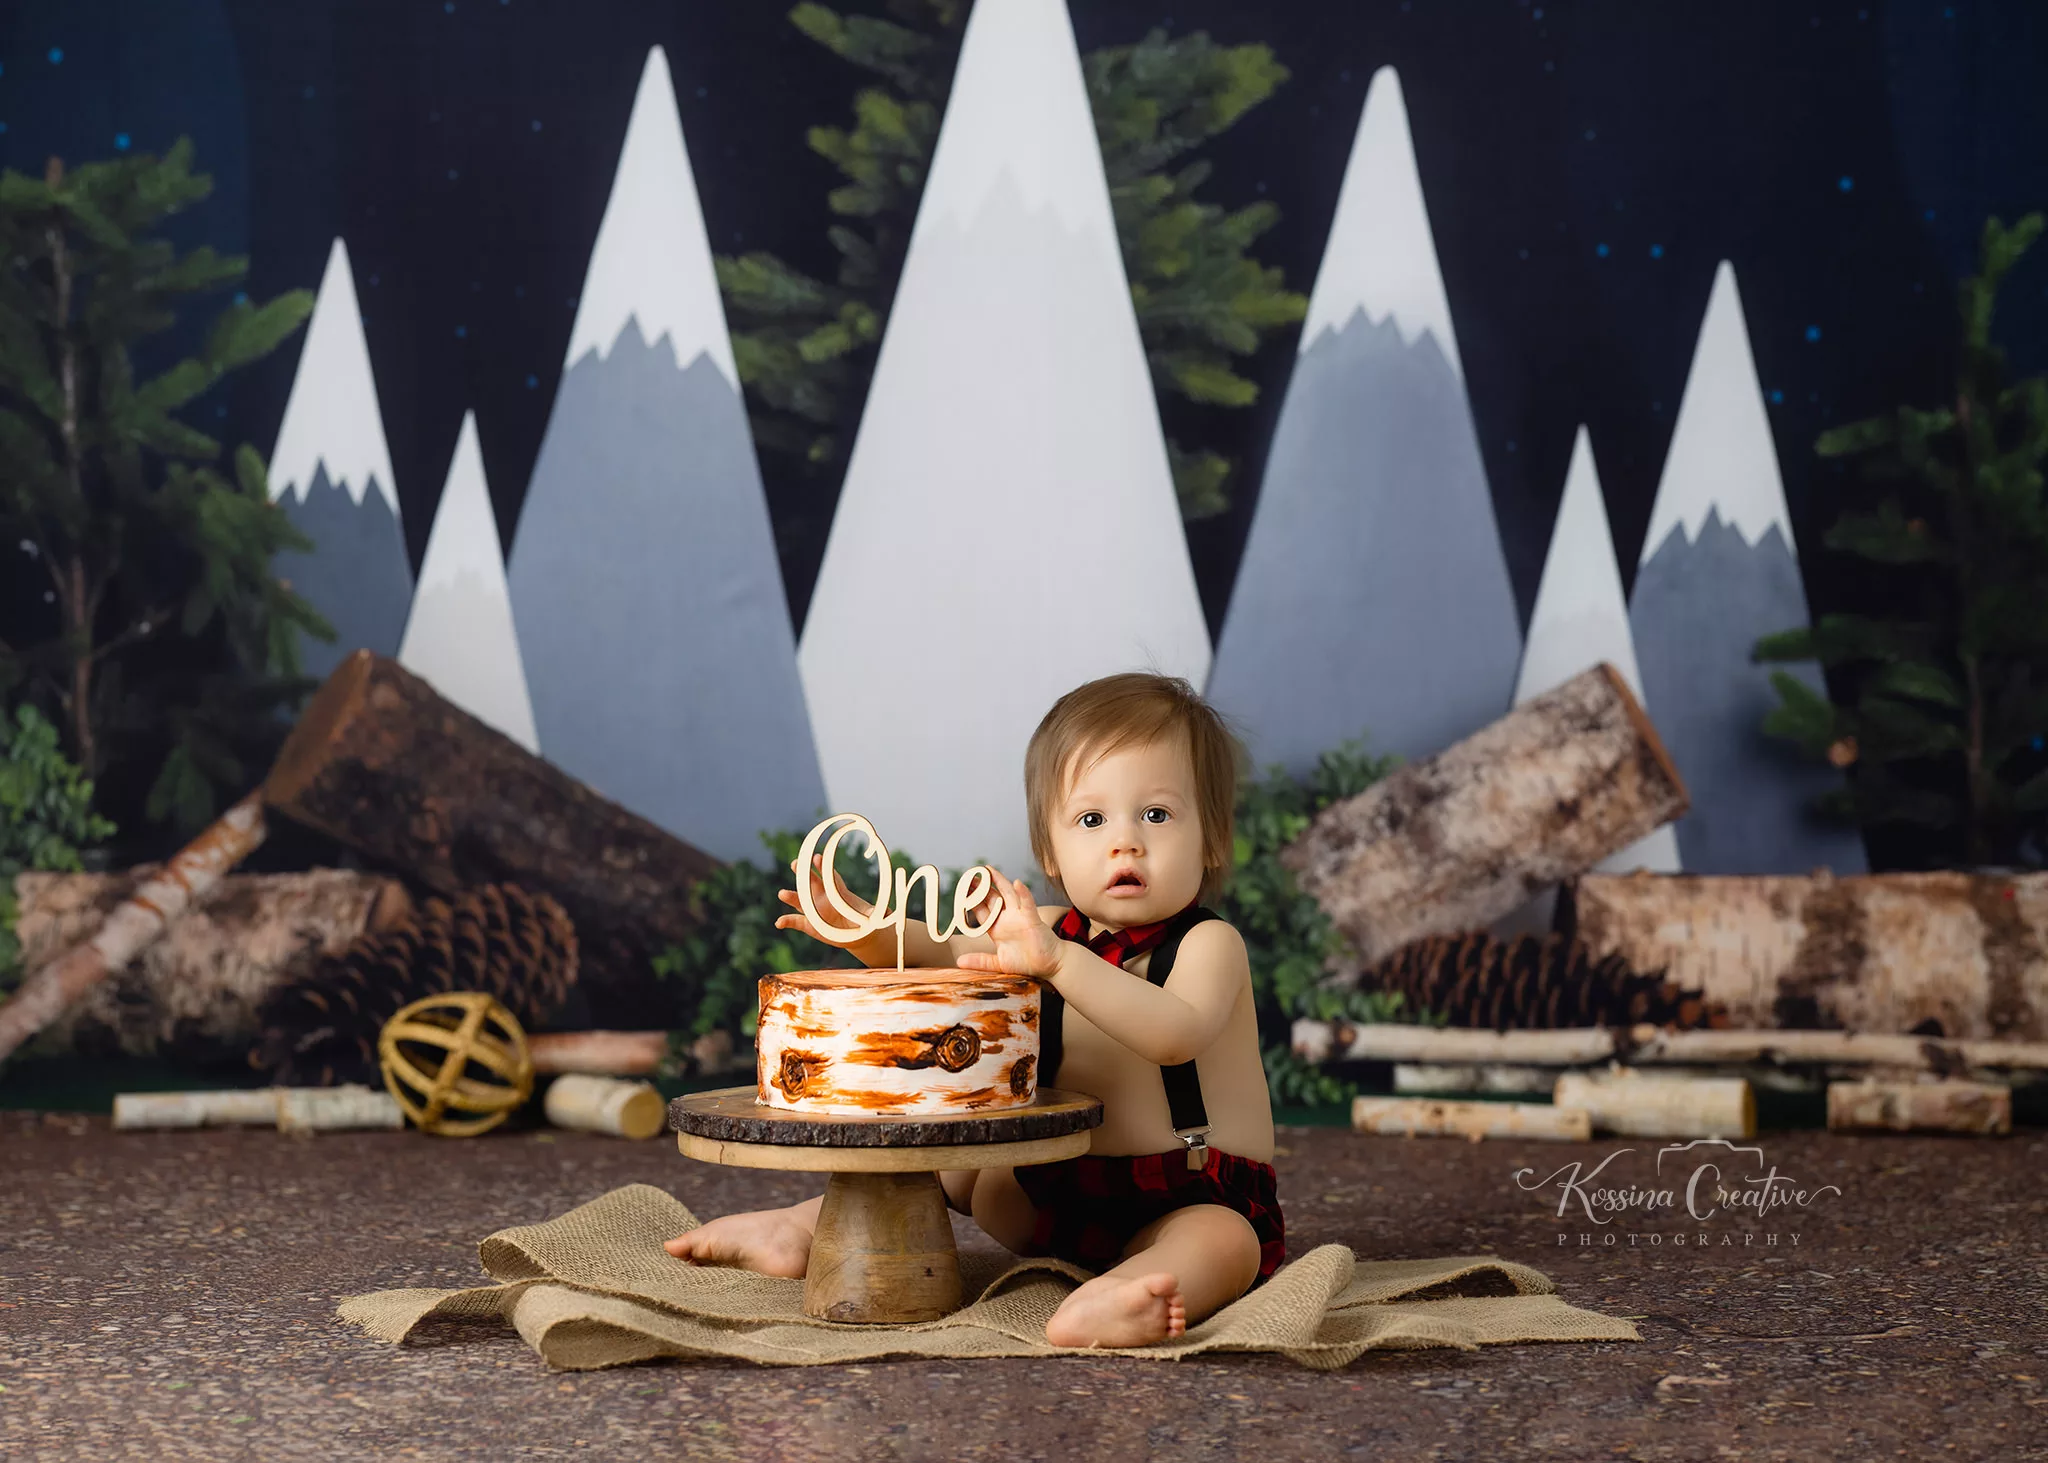 Orlando Boy Cake Smash 1st Birthday Photographer Photo Studio woods camping mountains forest nature camp fire cake